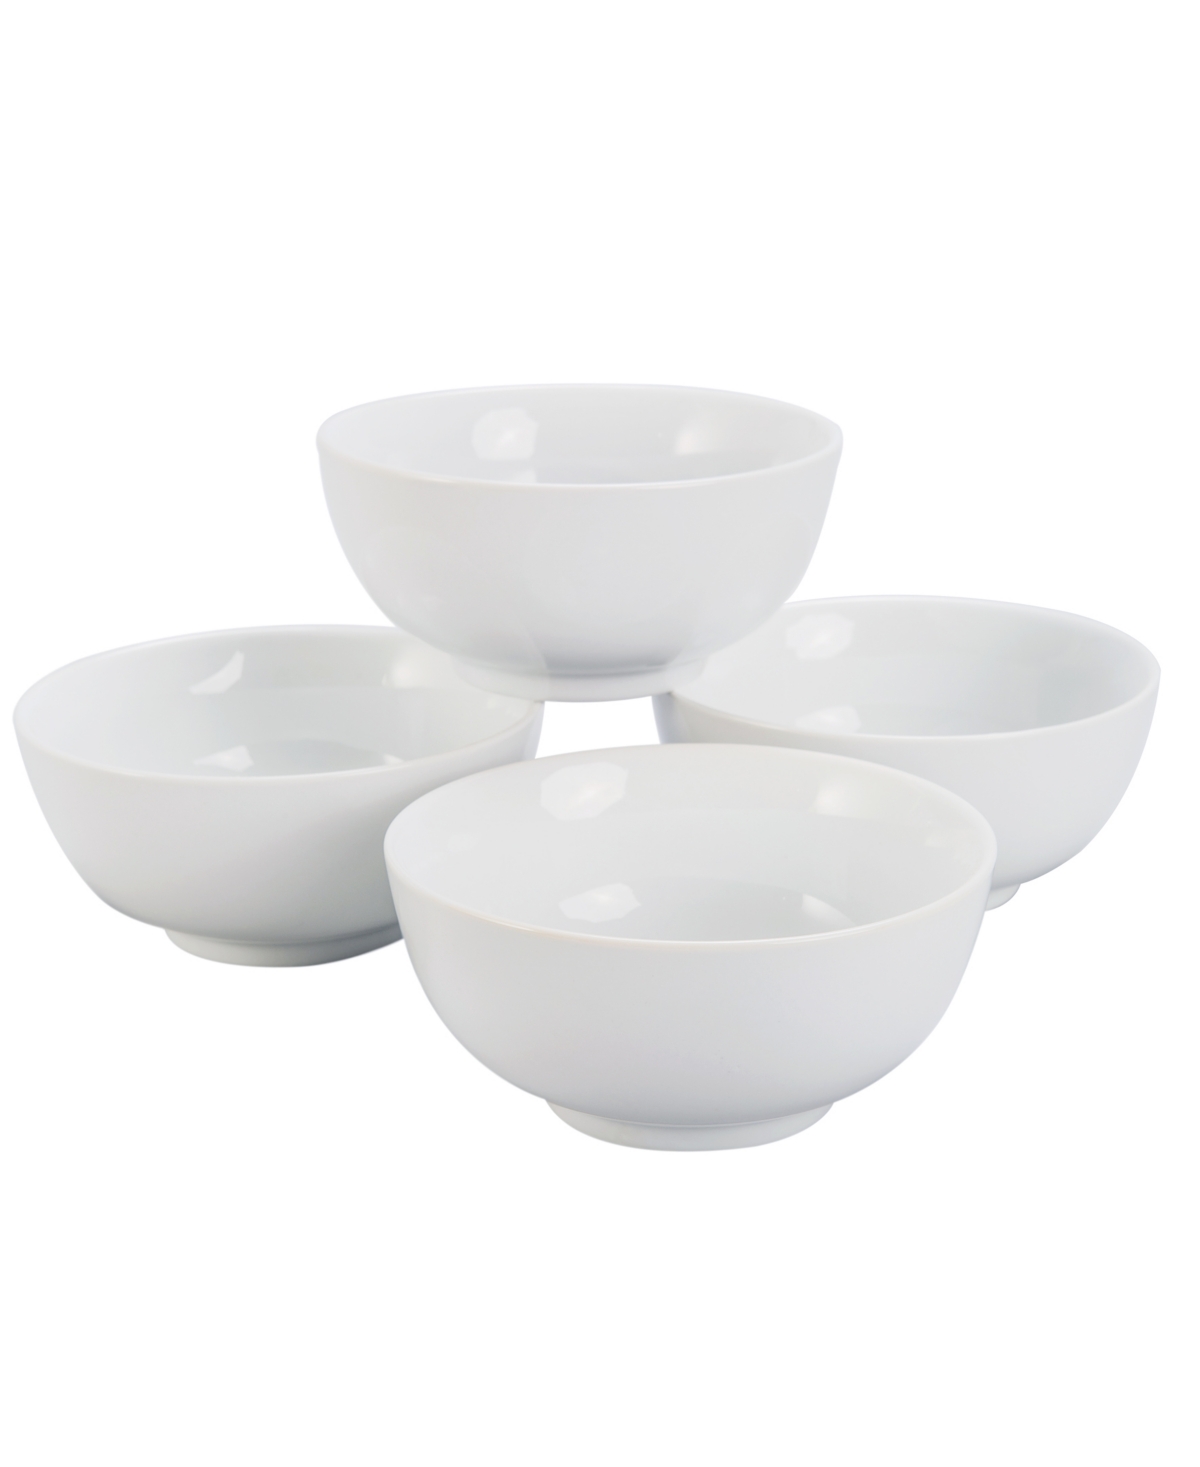 Chowder Bowls, Set of 4